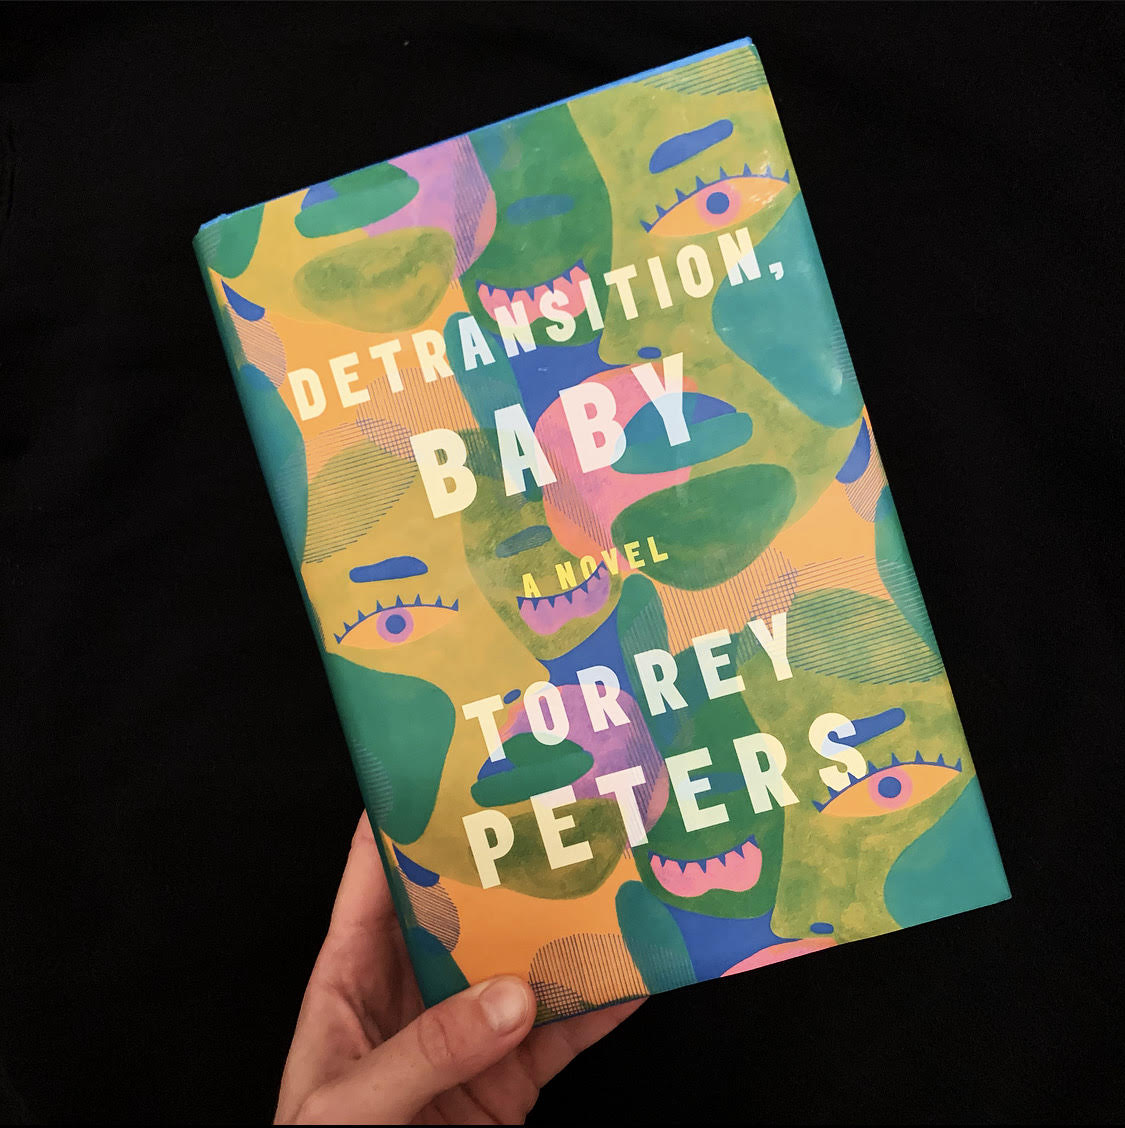 Spotlight: DETRANSITION, BABY by Torrey Peters